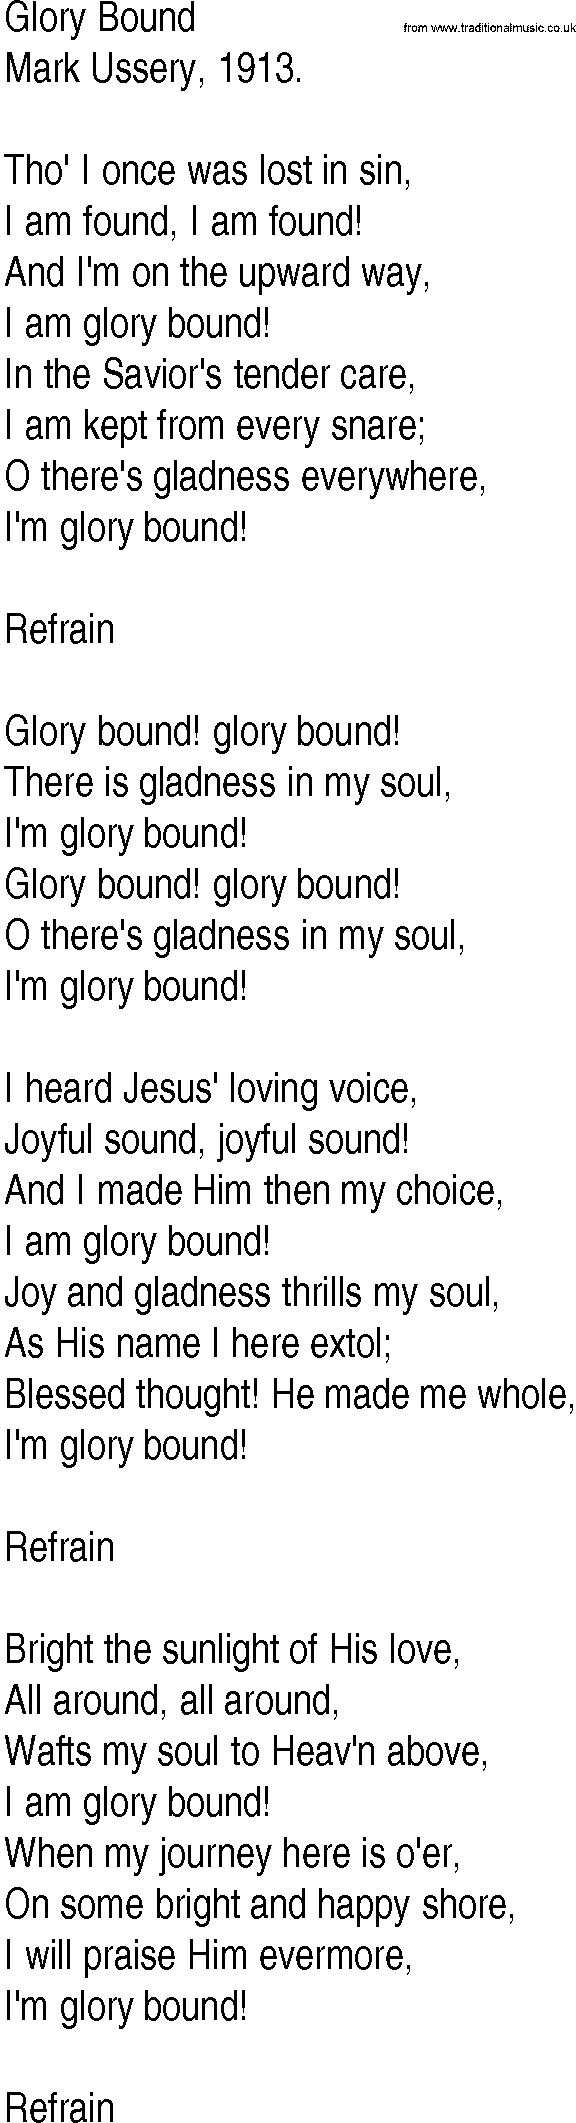 Hymn and Gospel Song: Glory Bound by Mark Ussery lyrics